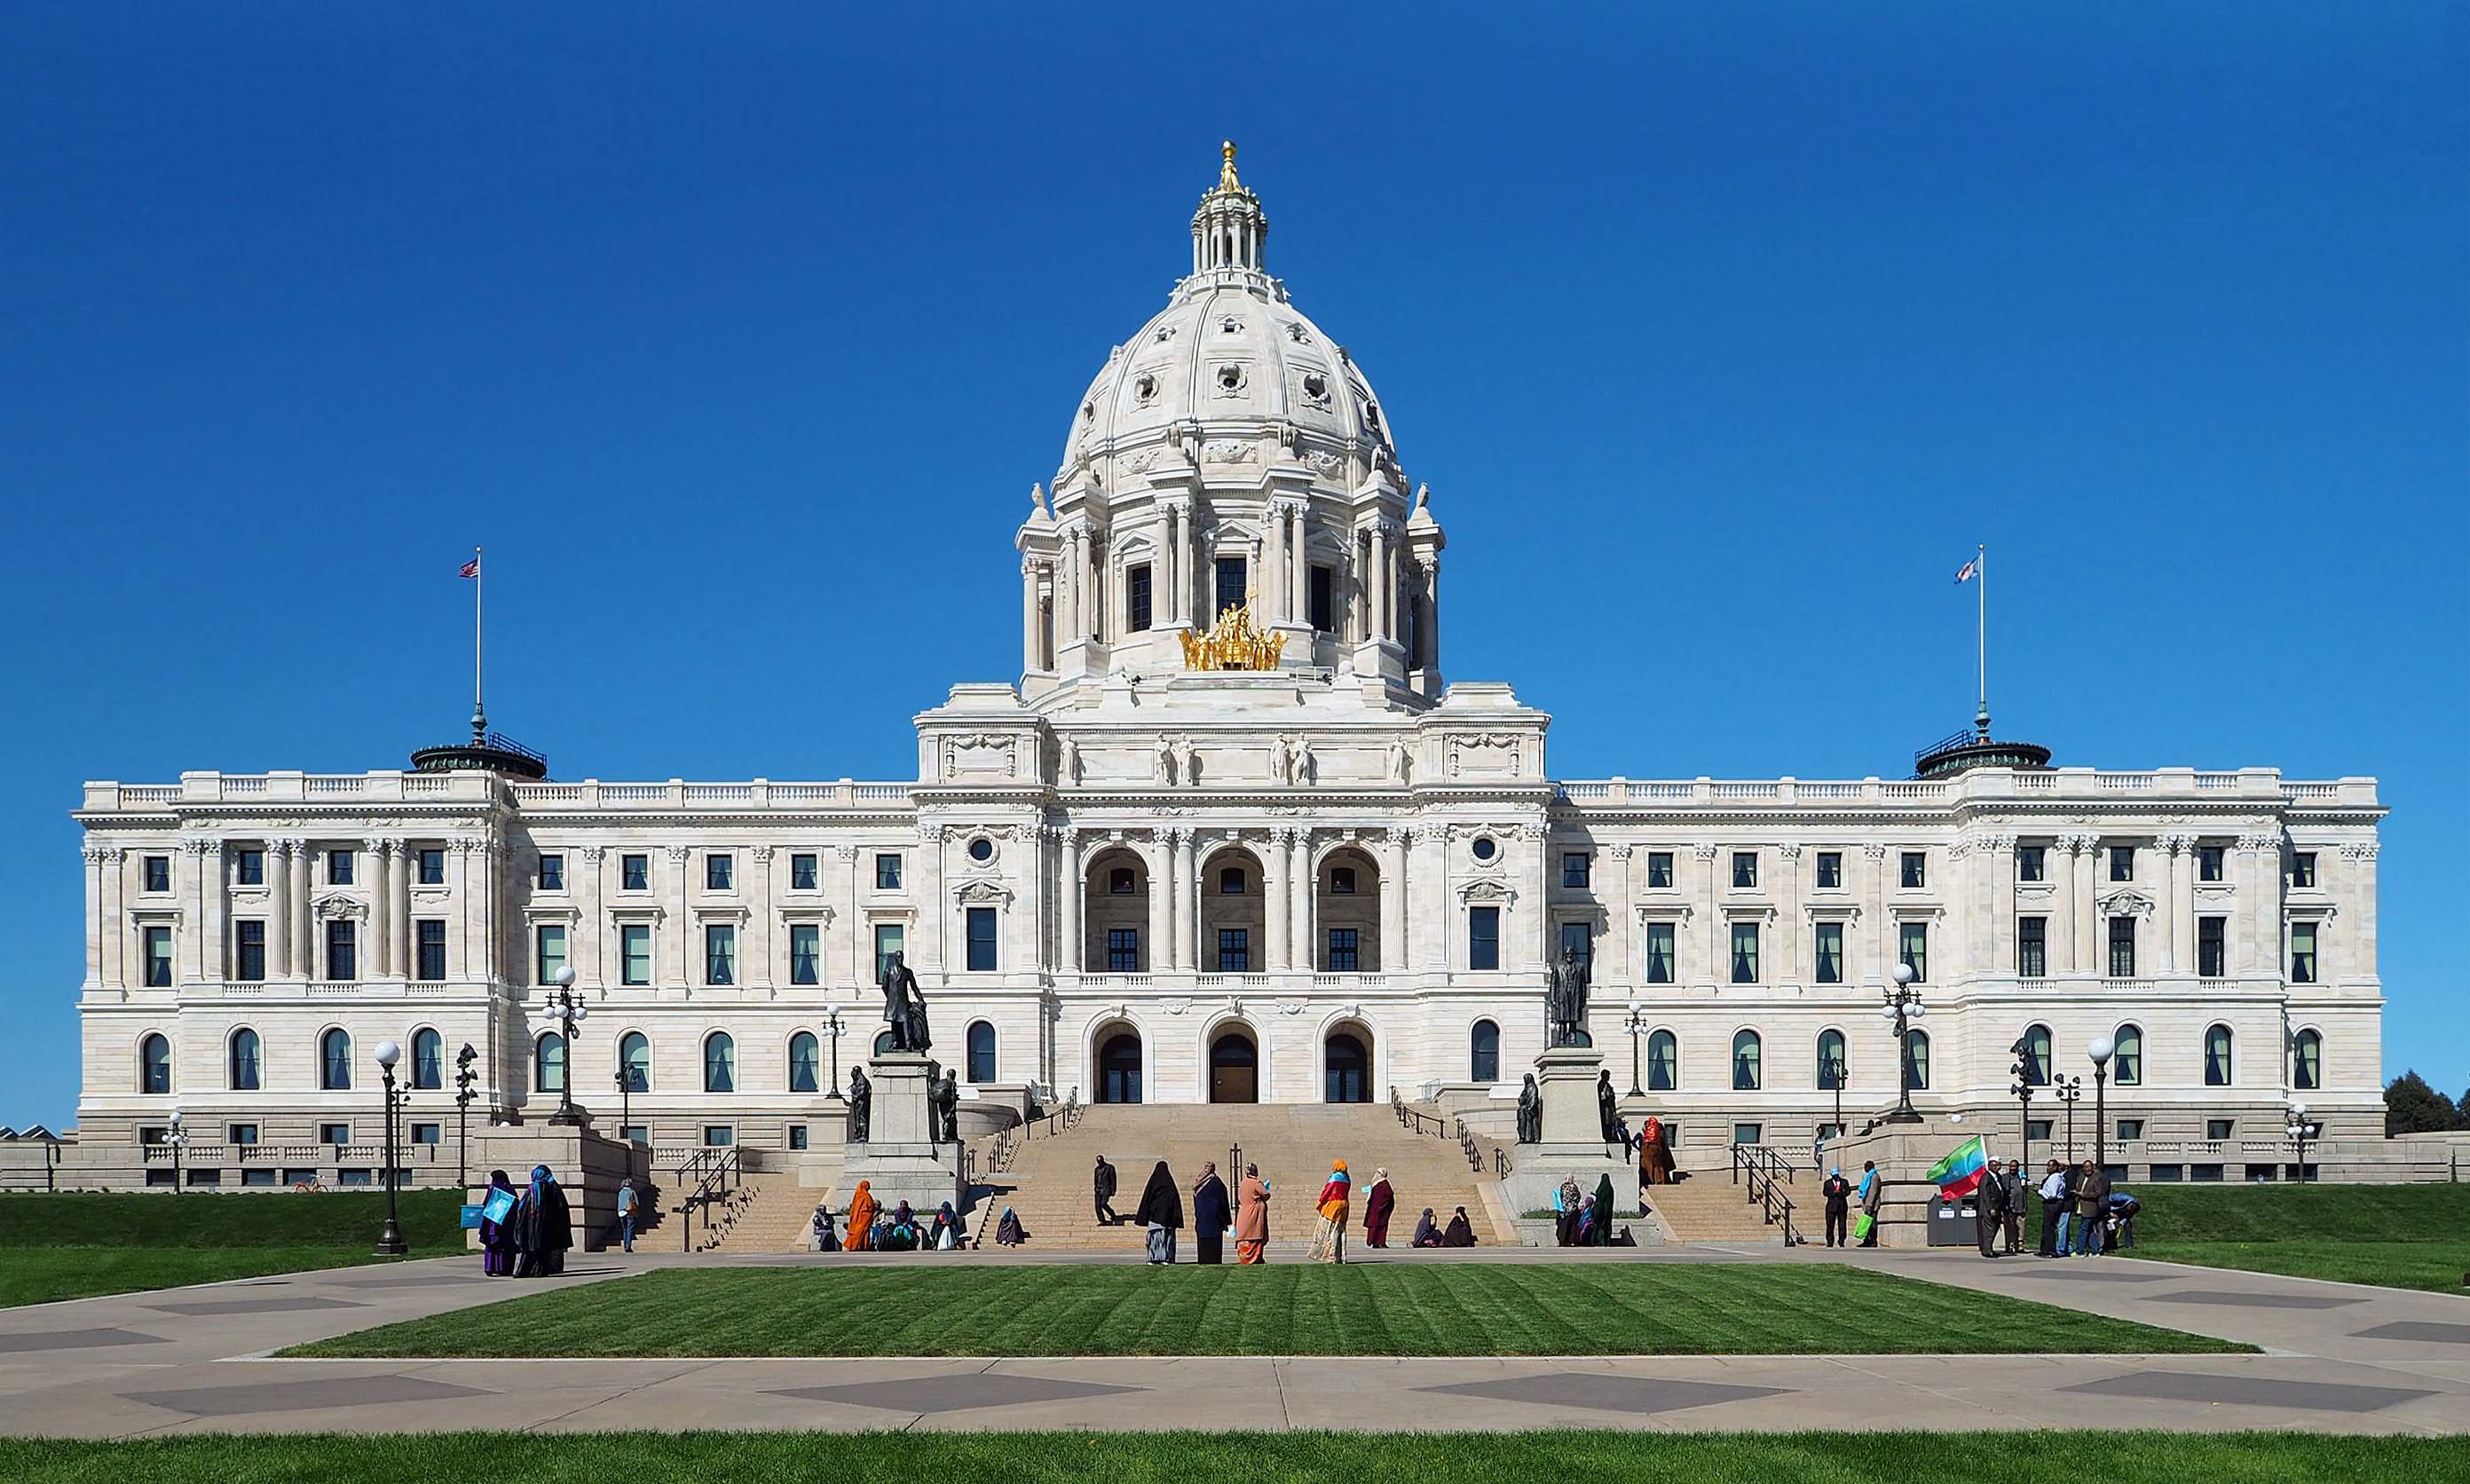 Visit Minnesota’s State Capitol